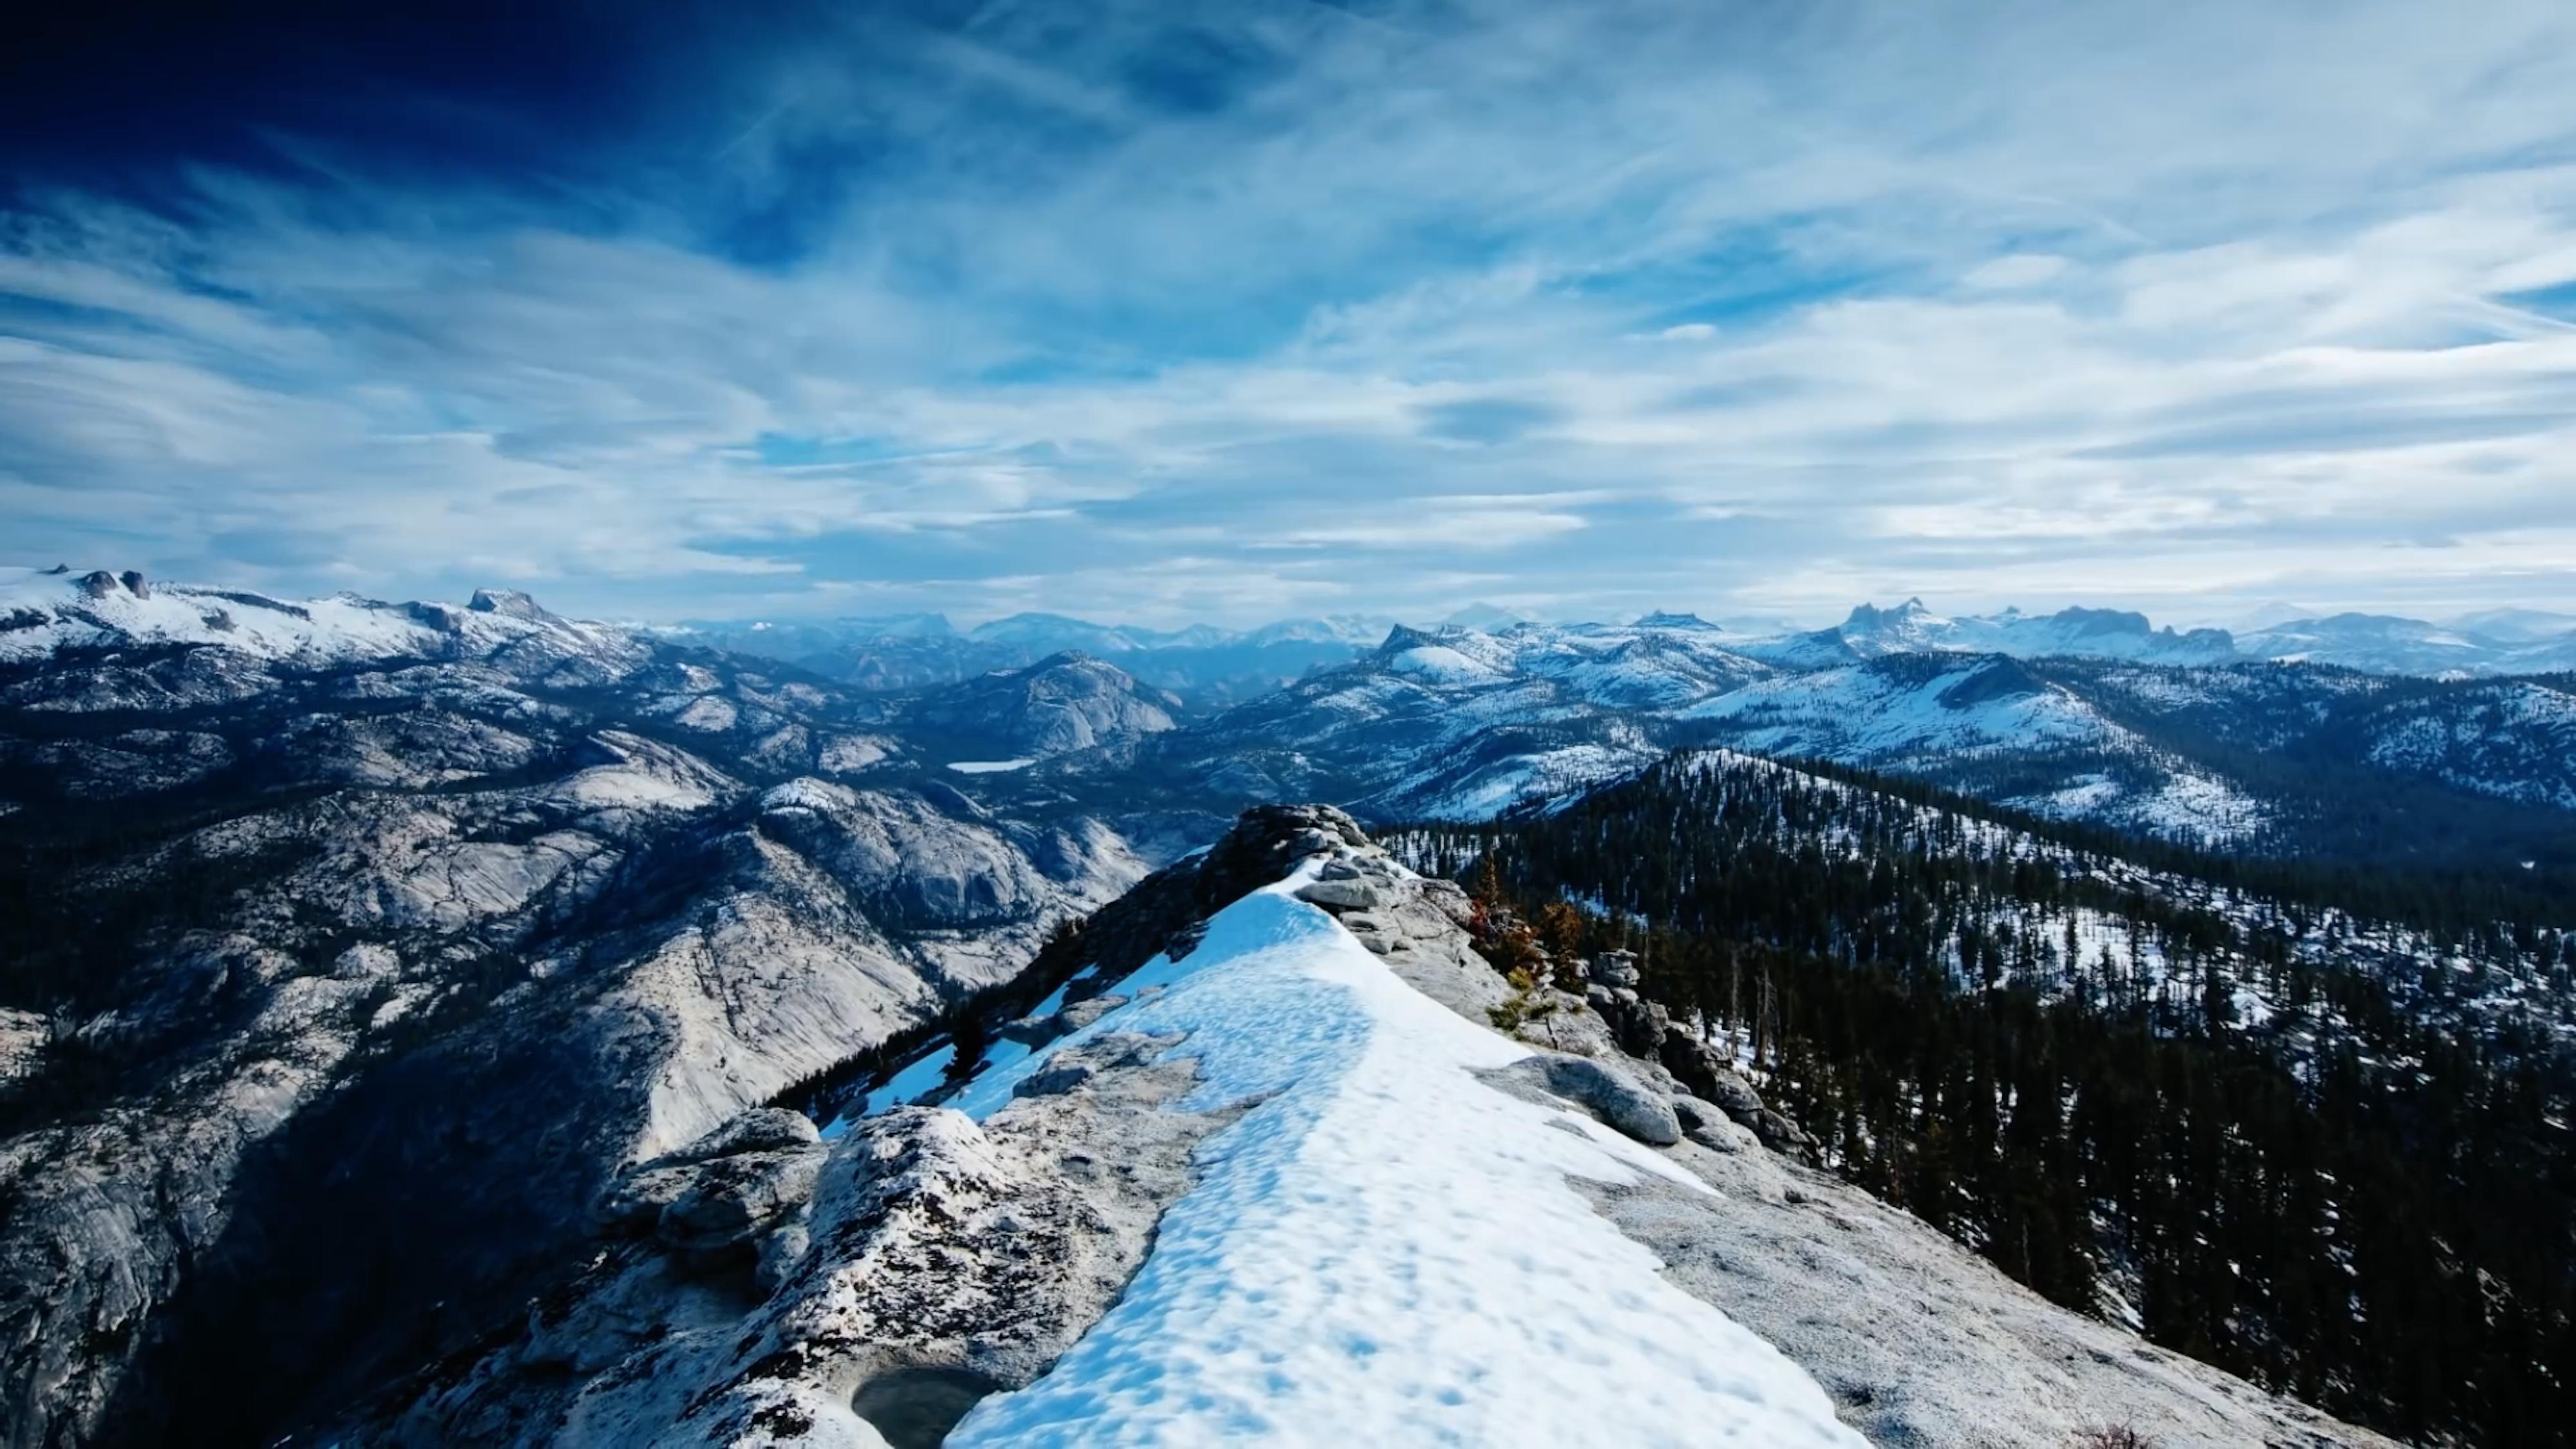 Download wallpaper 2560x1600 mountains plain landscape peaks twilight  widescreen 1610 hd background